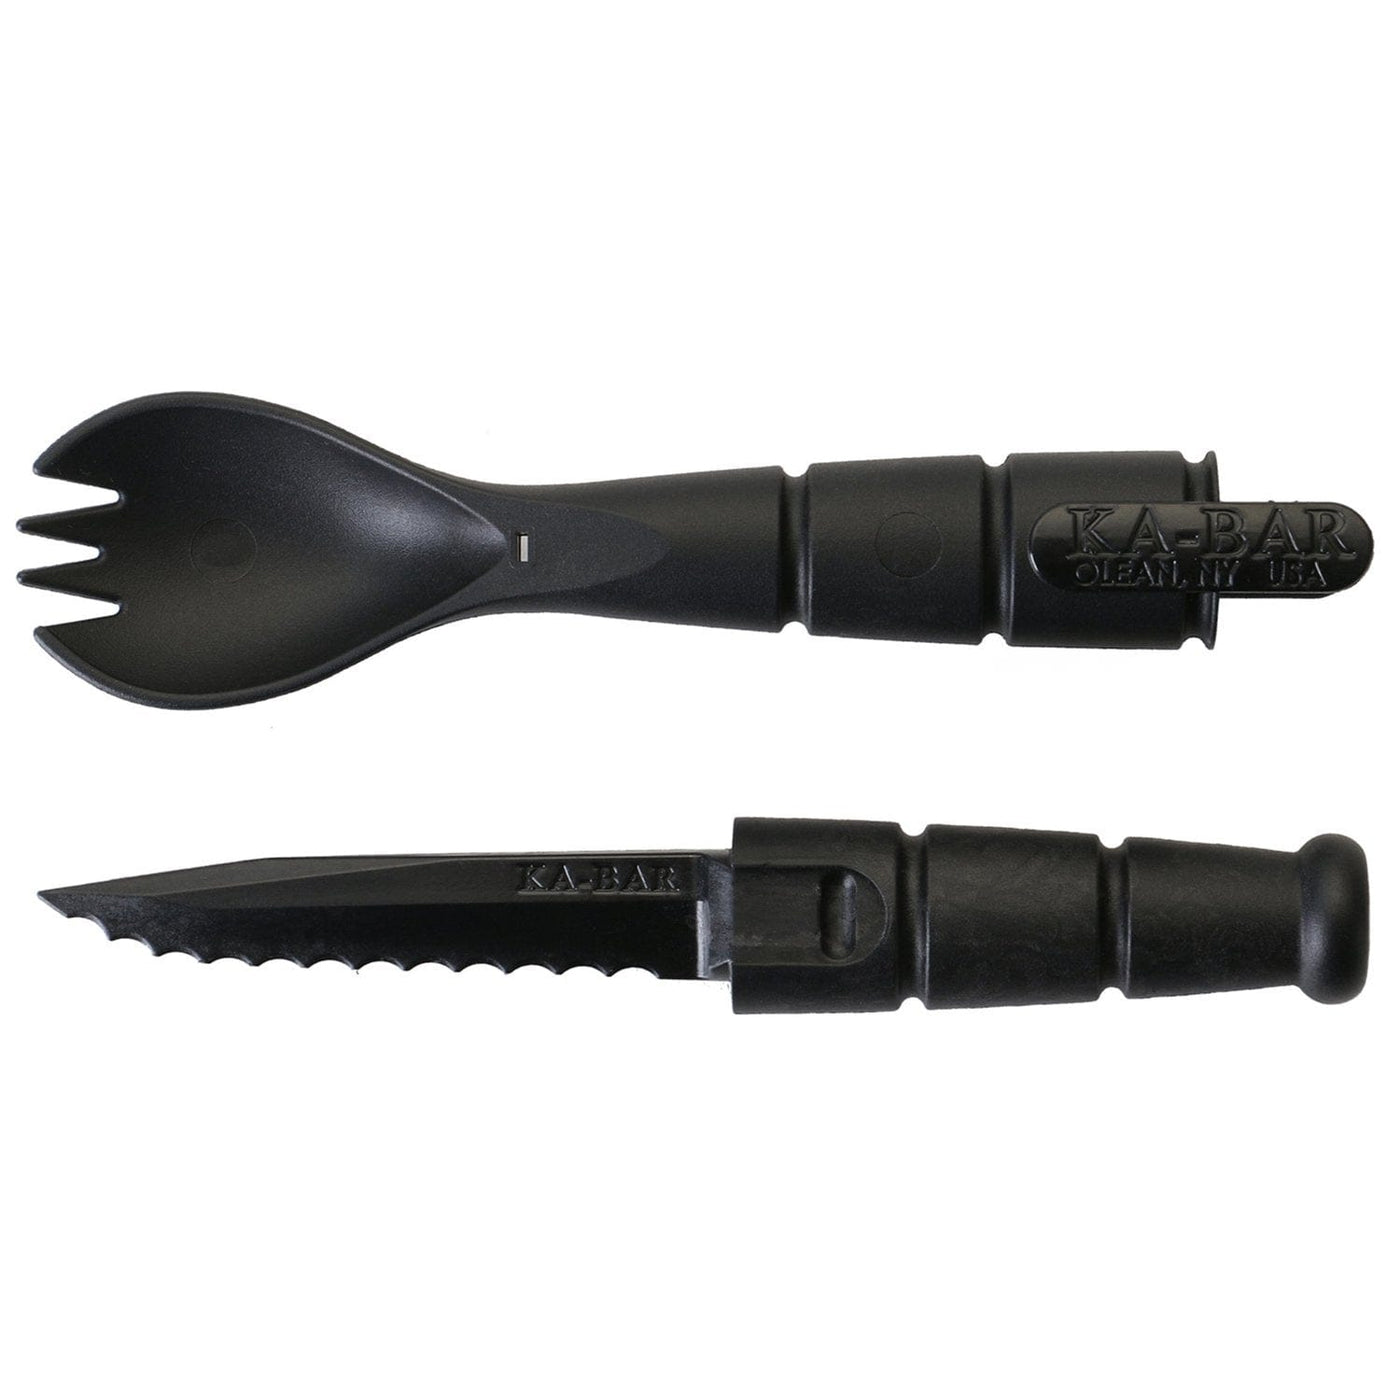 Ka-Bar Knives KA-BAR Tactical Spork (Spoon Fork Knife) Tool Black Camping And Outdoor